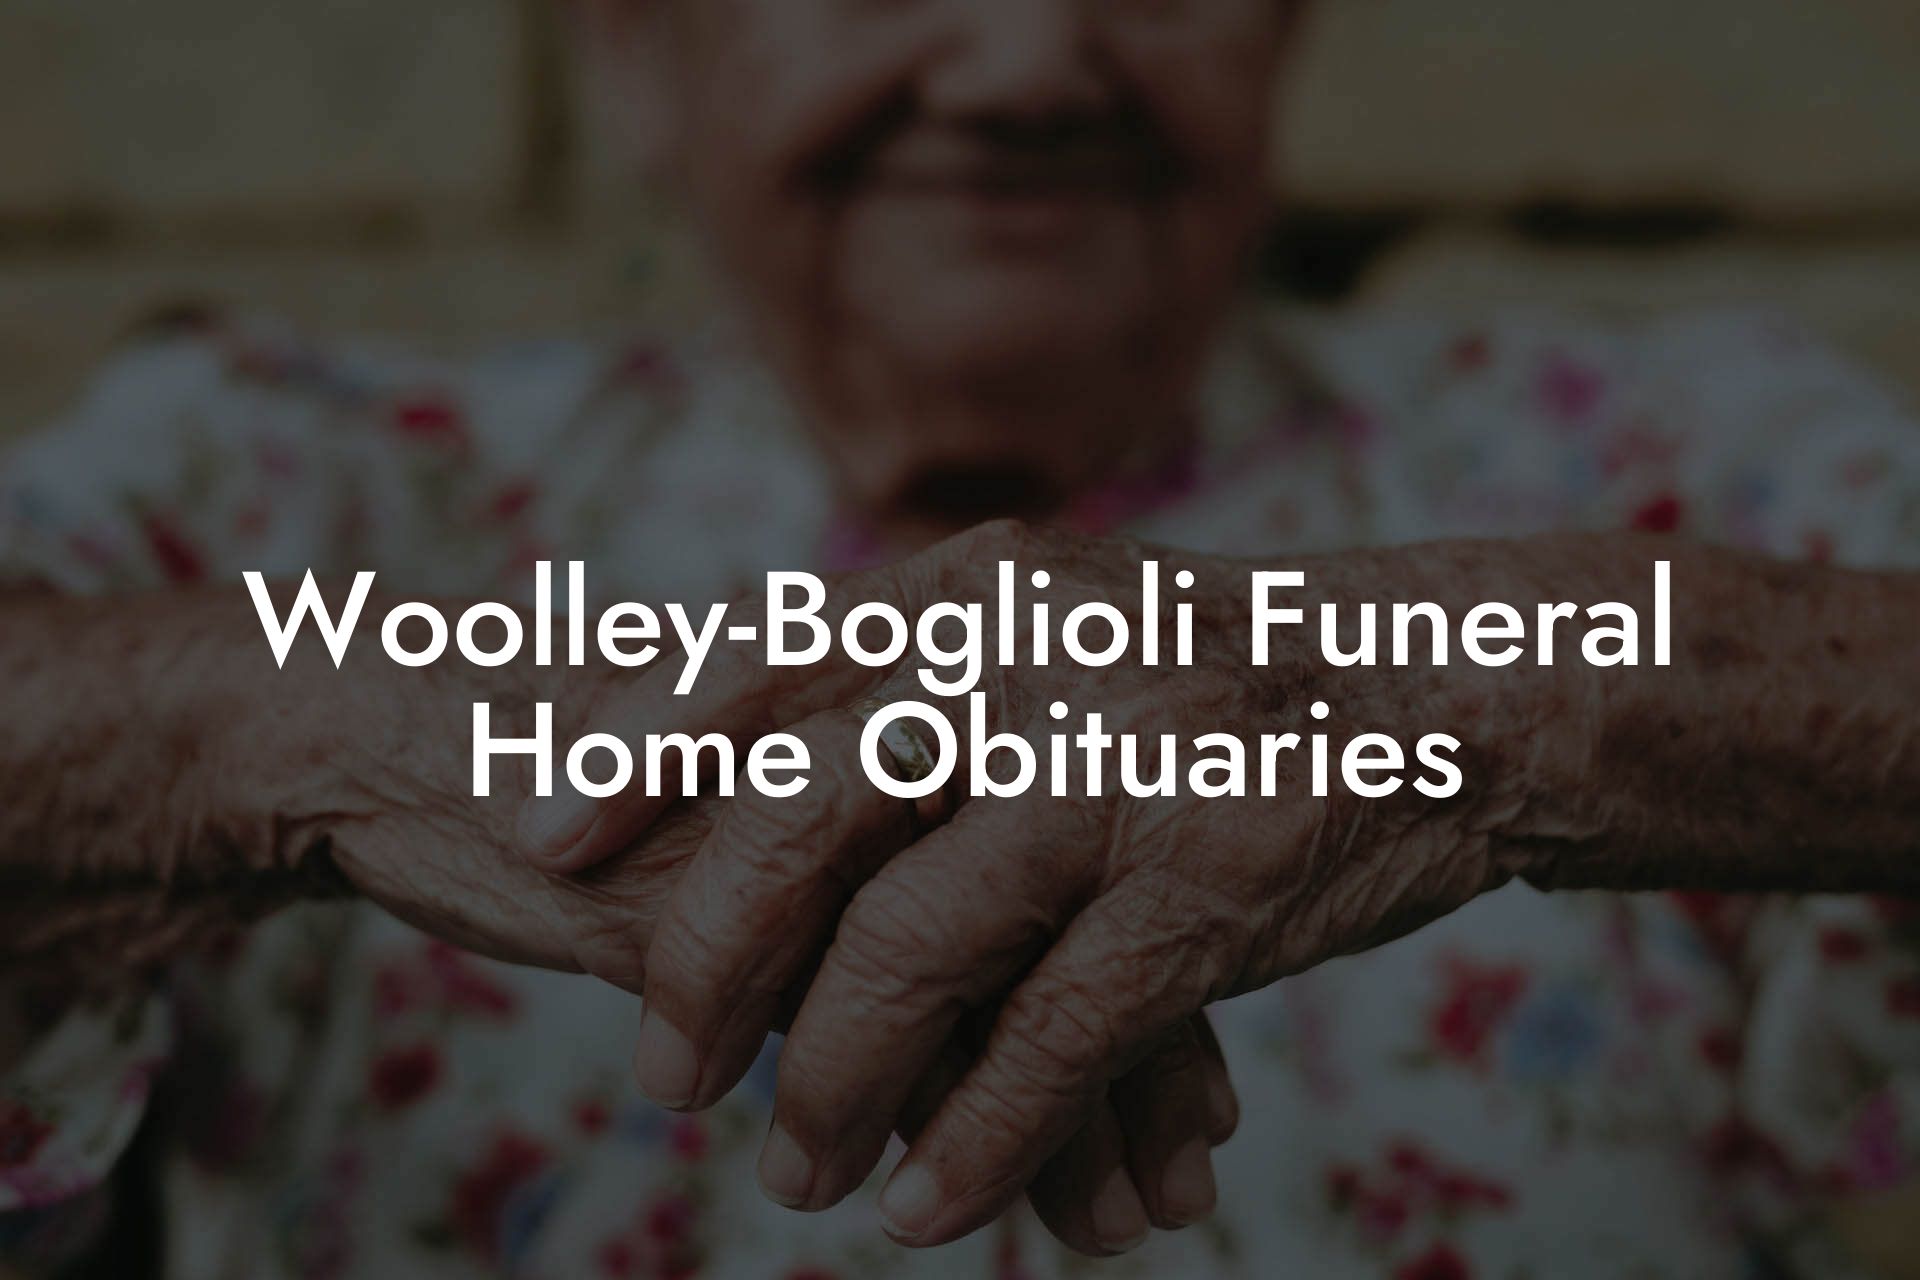 Woolley-Boglioli Funeral Home Obituaries